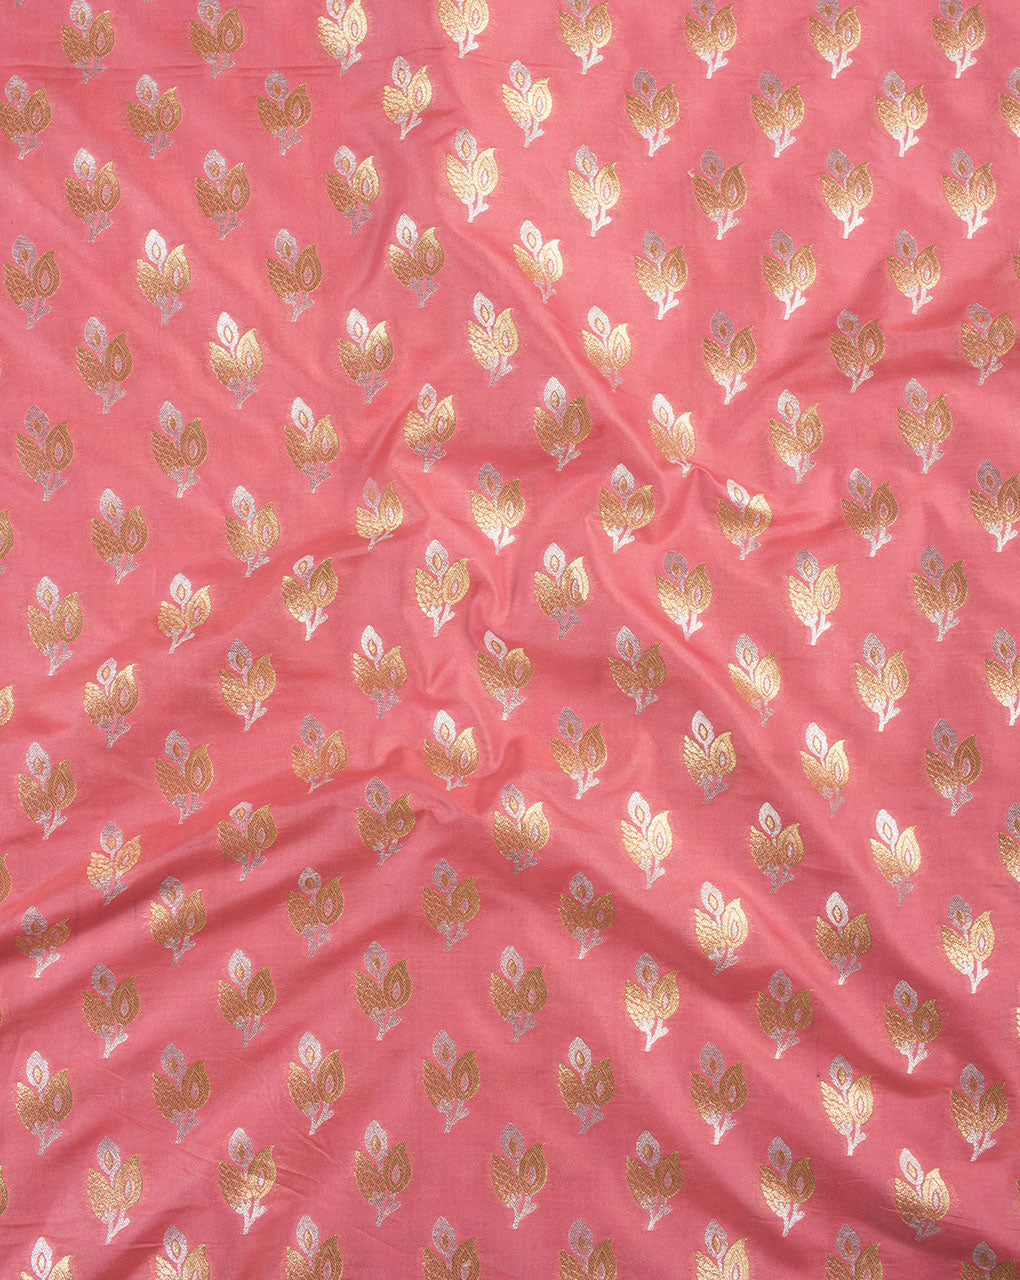 Booti Woven Zari Jacquard Banarasi Taffeta Silk Fabric - Fabriclore.com